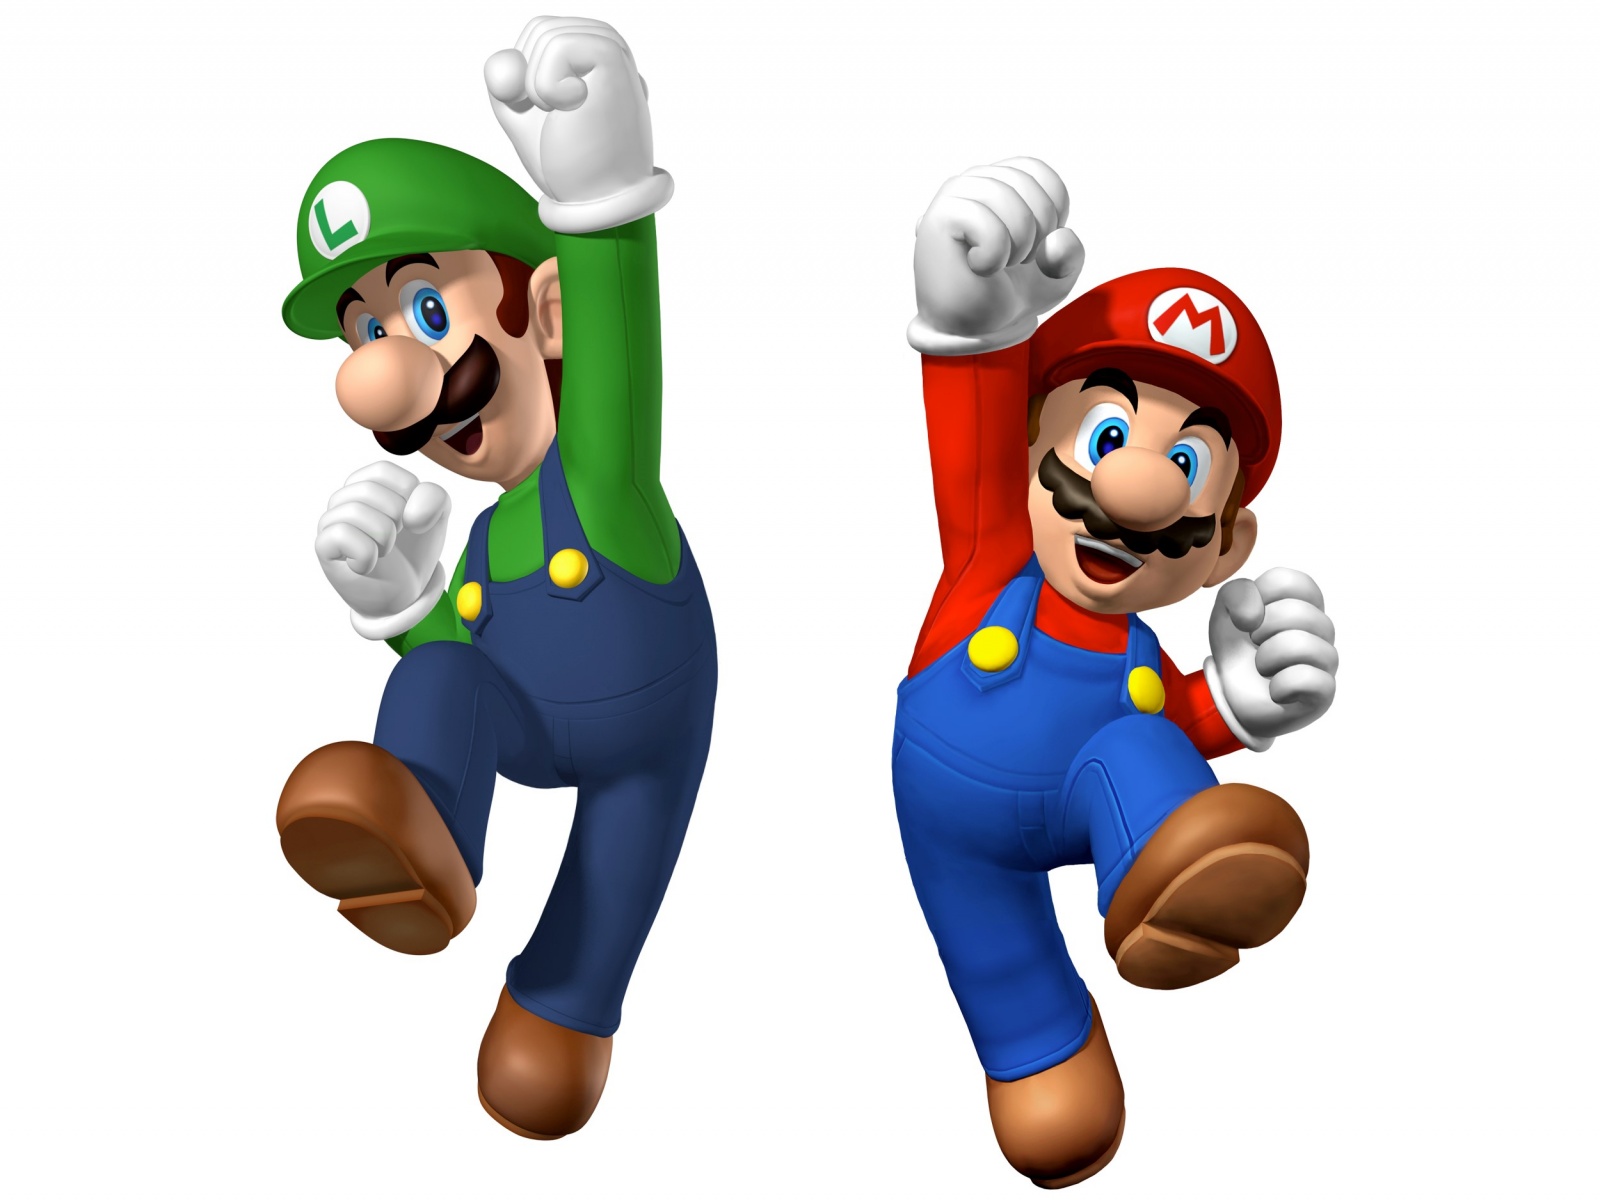 Mario and Luigi jumping